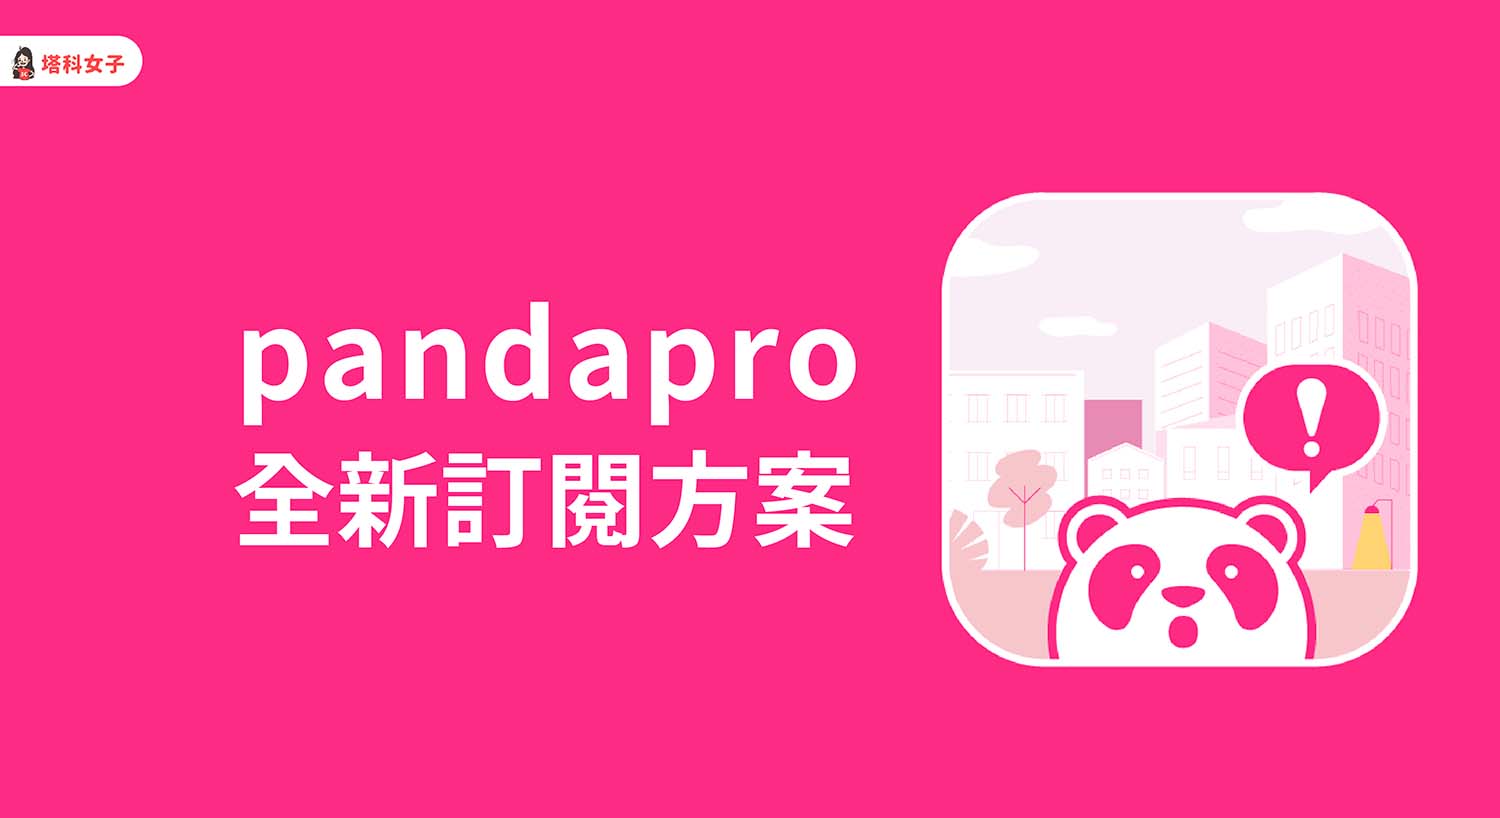 foodpanda 會員制 pandapro 推出多元訂閱方案，比較與整理看這篇